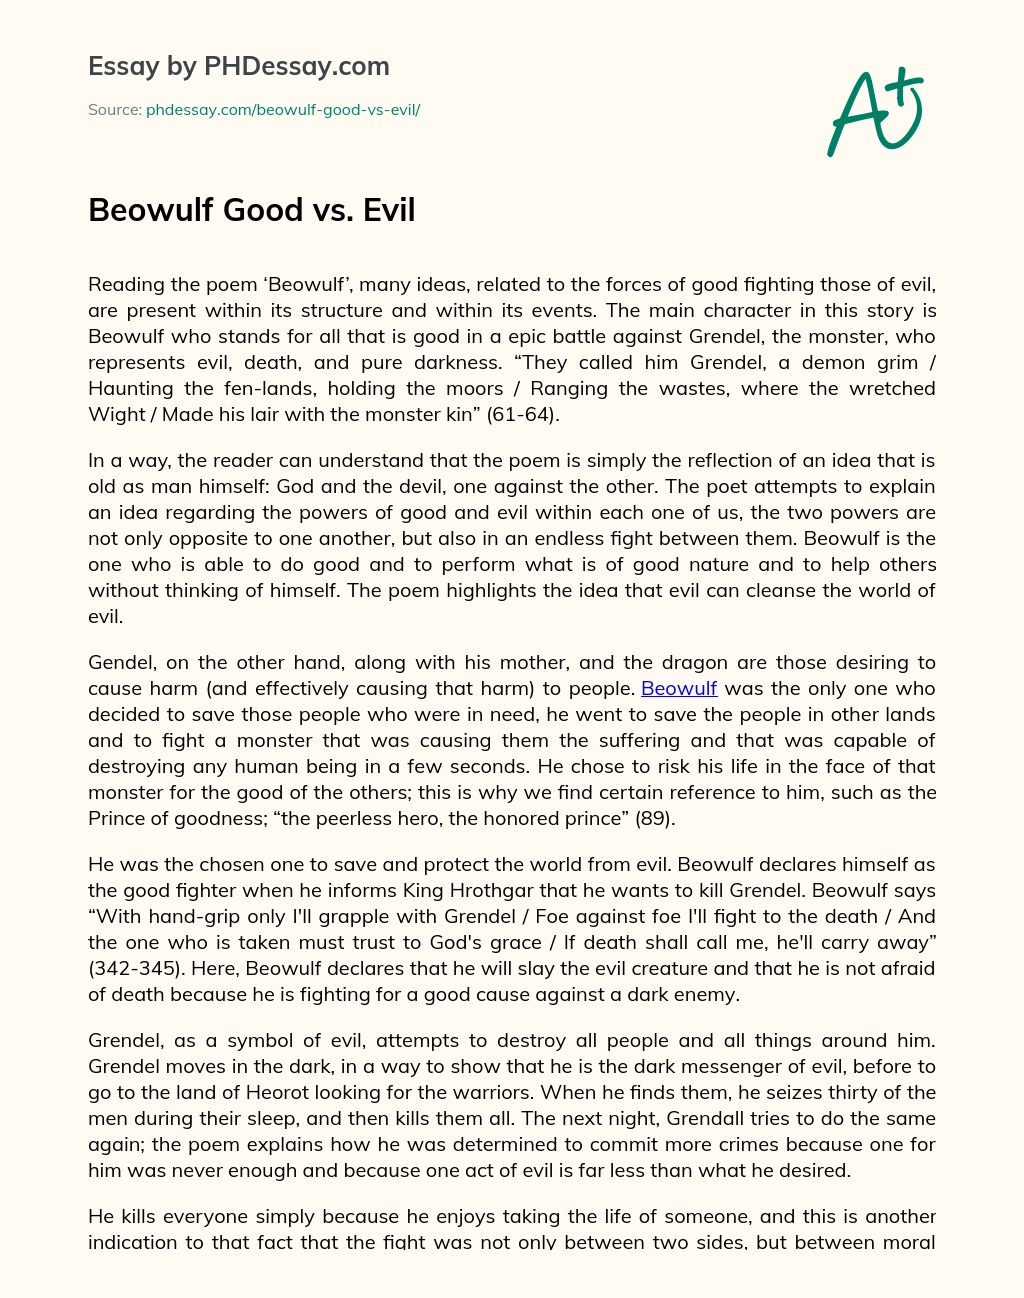 Beowulf Good vs. Evil essay